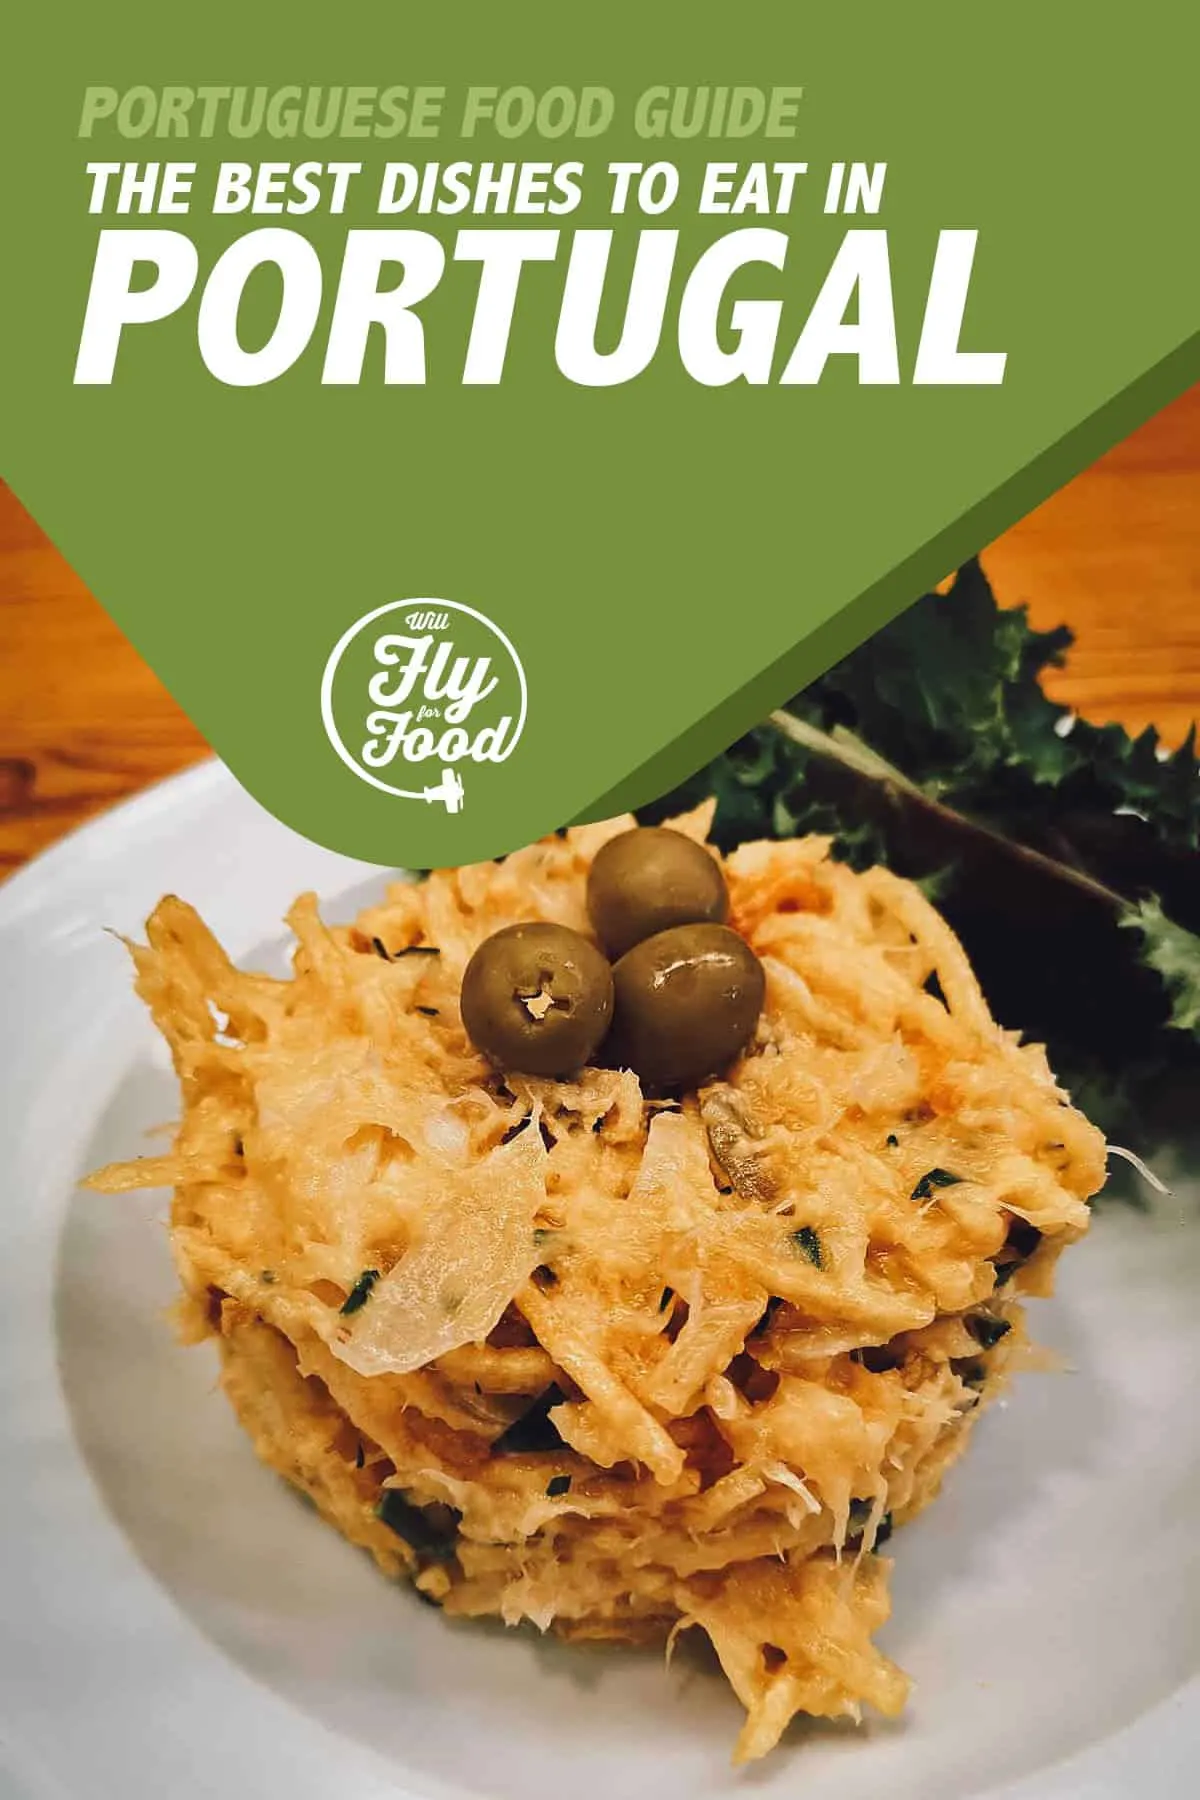 Portuguese salt cod dish